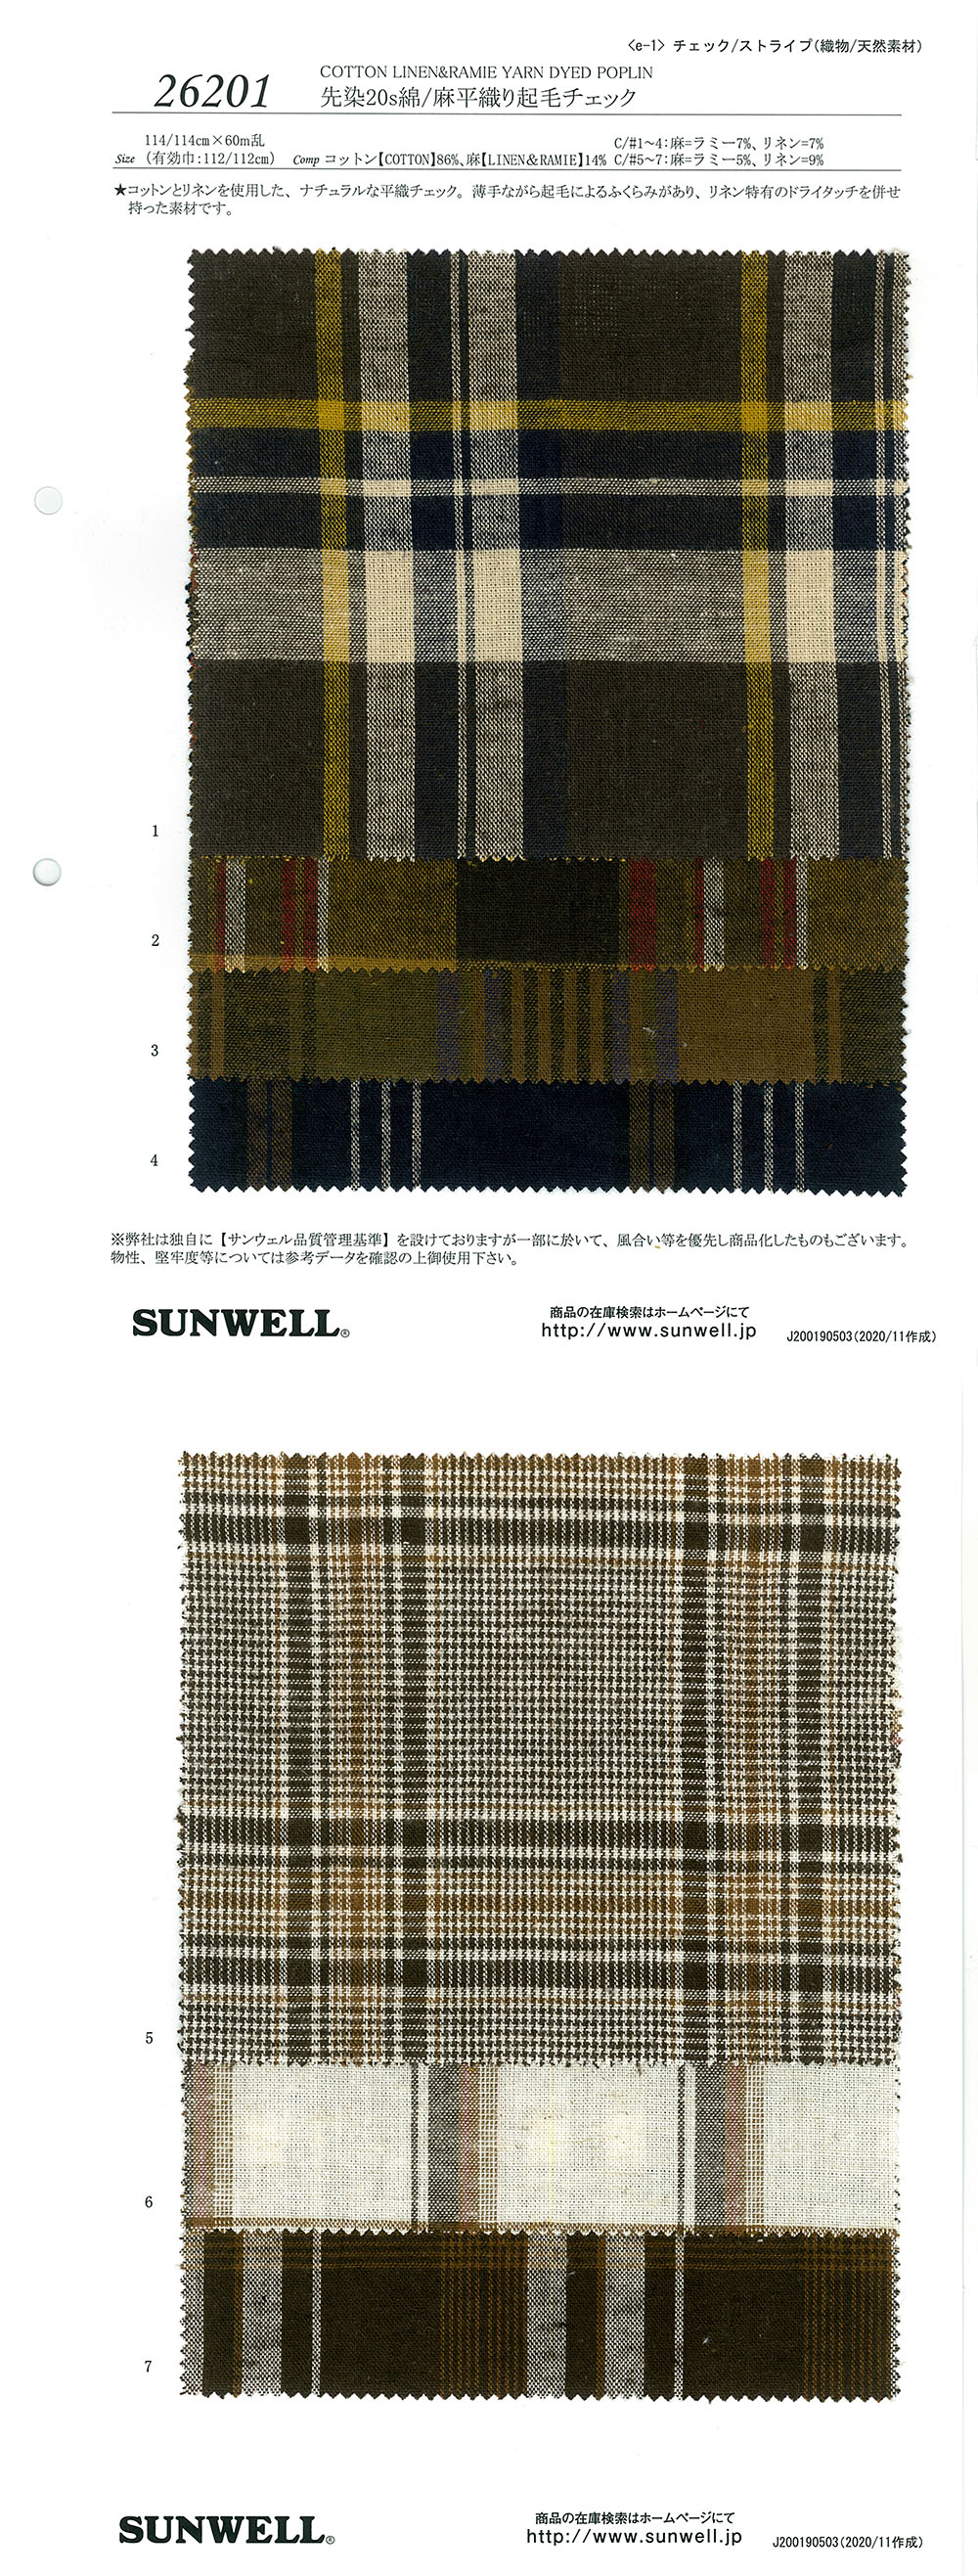 26201 Hilado Teñido 20 Hilo De Un Solo Hilo / Tejido Plano De Lino Fuzzy Check[Fabrica Textil] SUNWELL